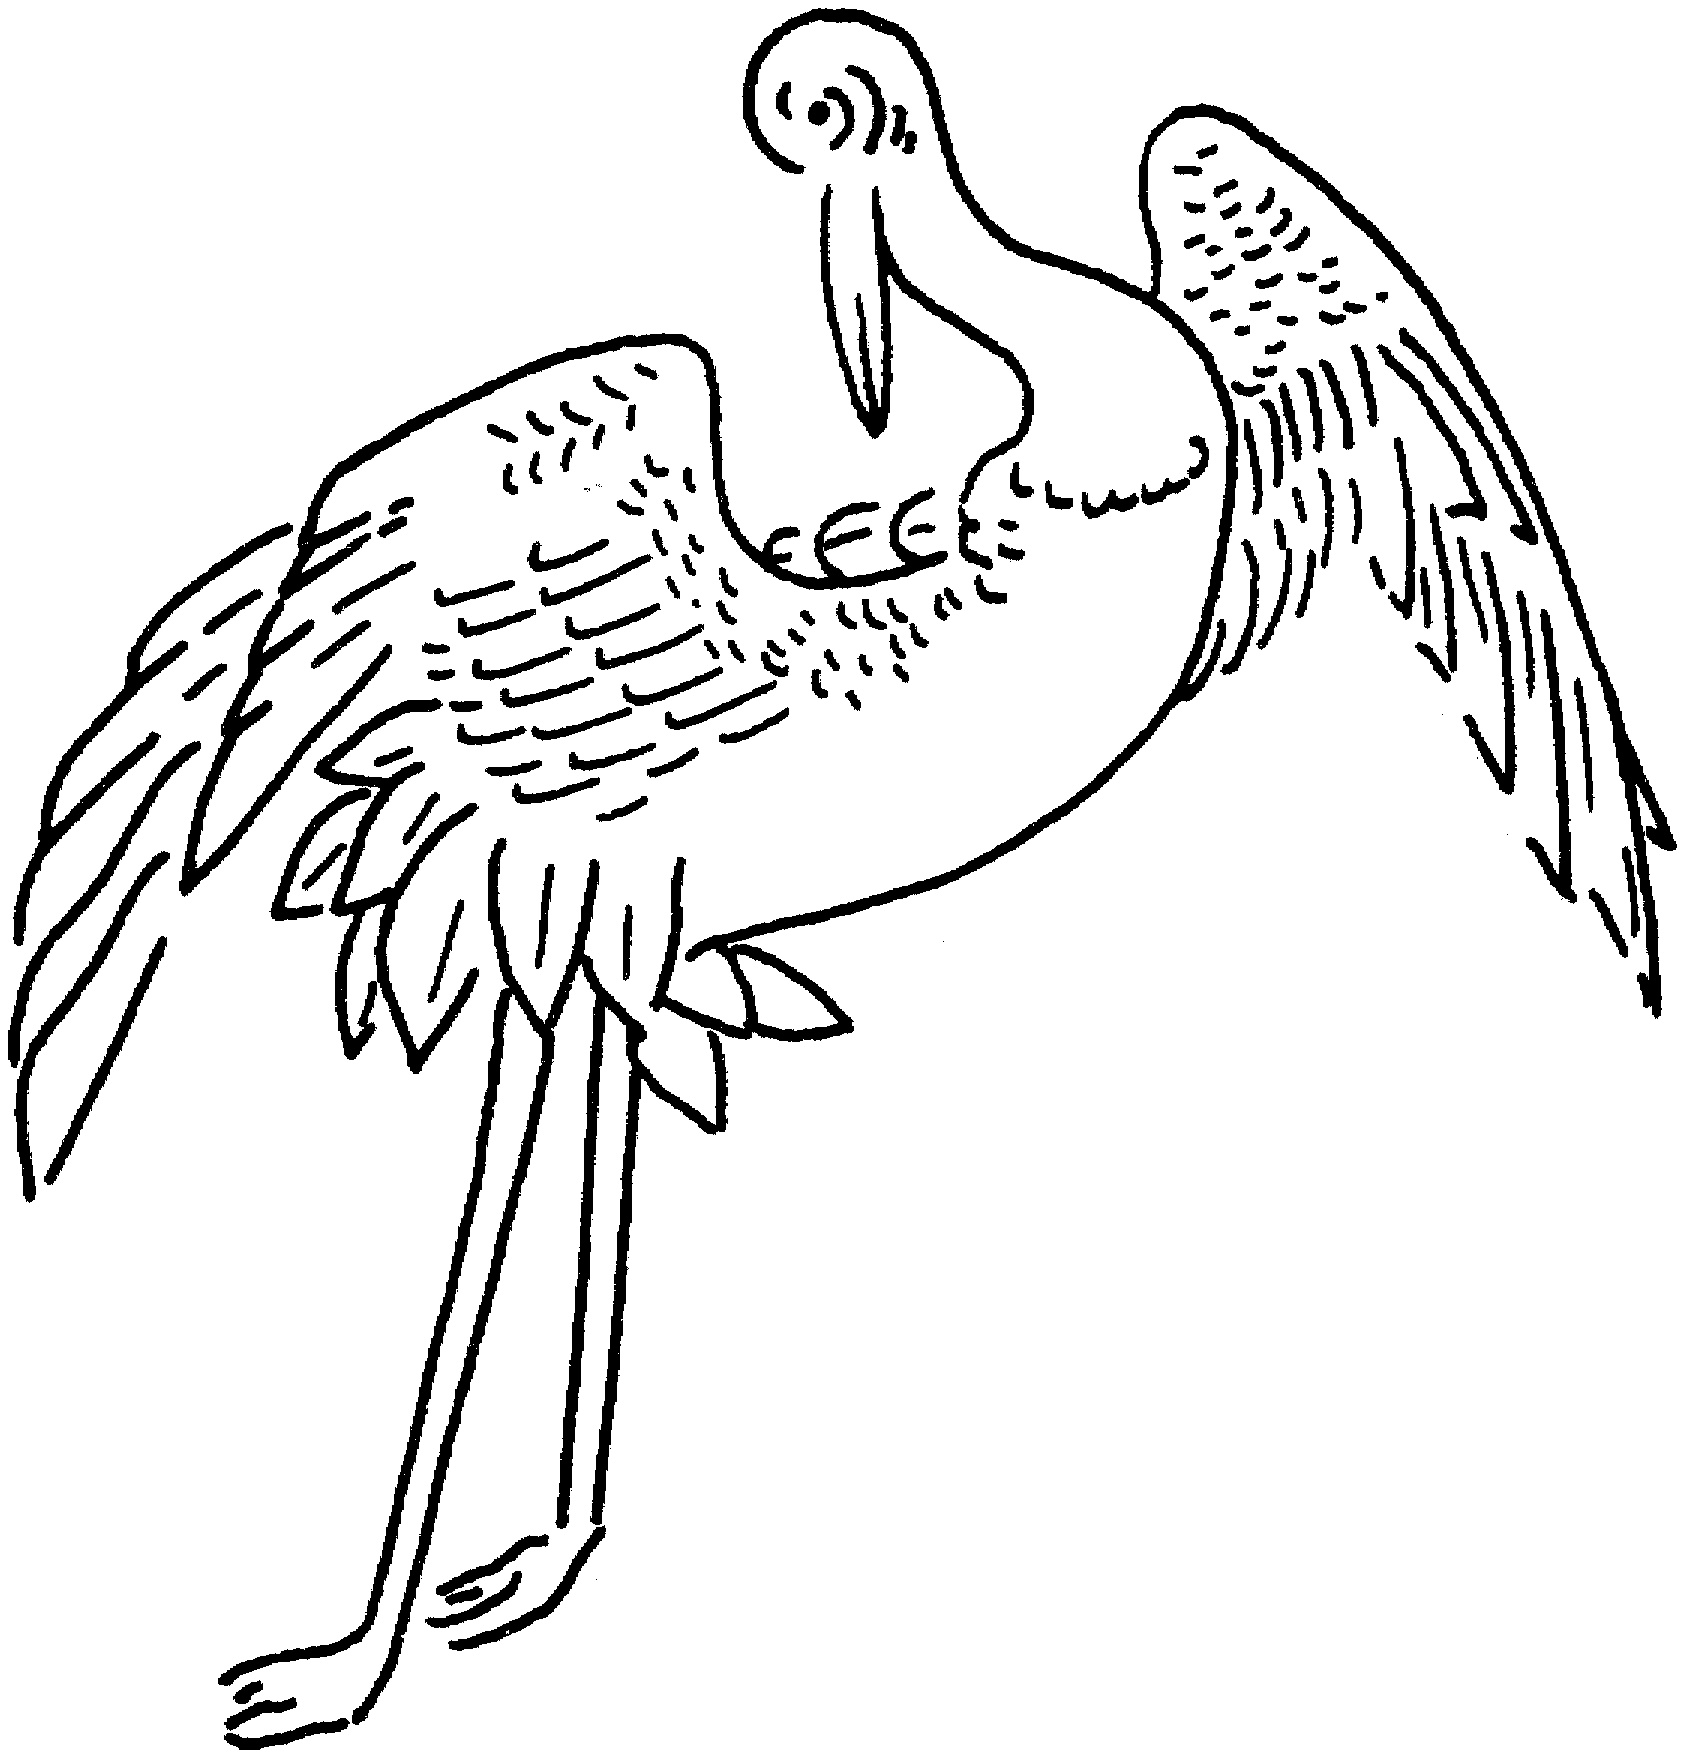 Heron Drawing